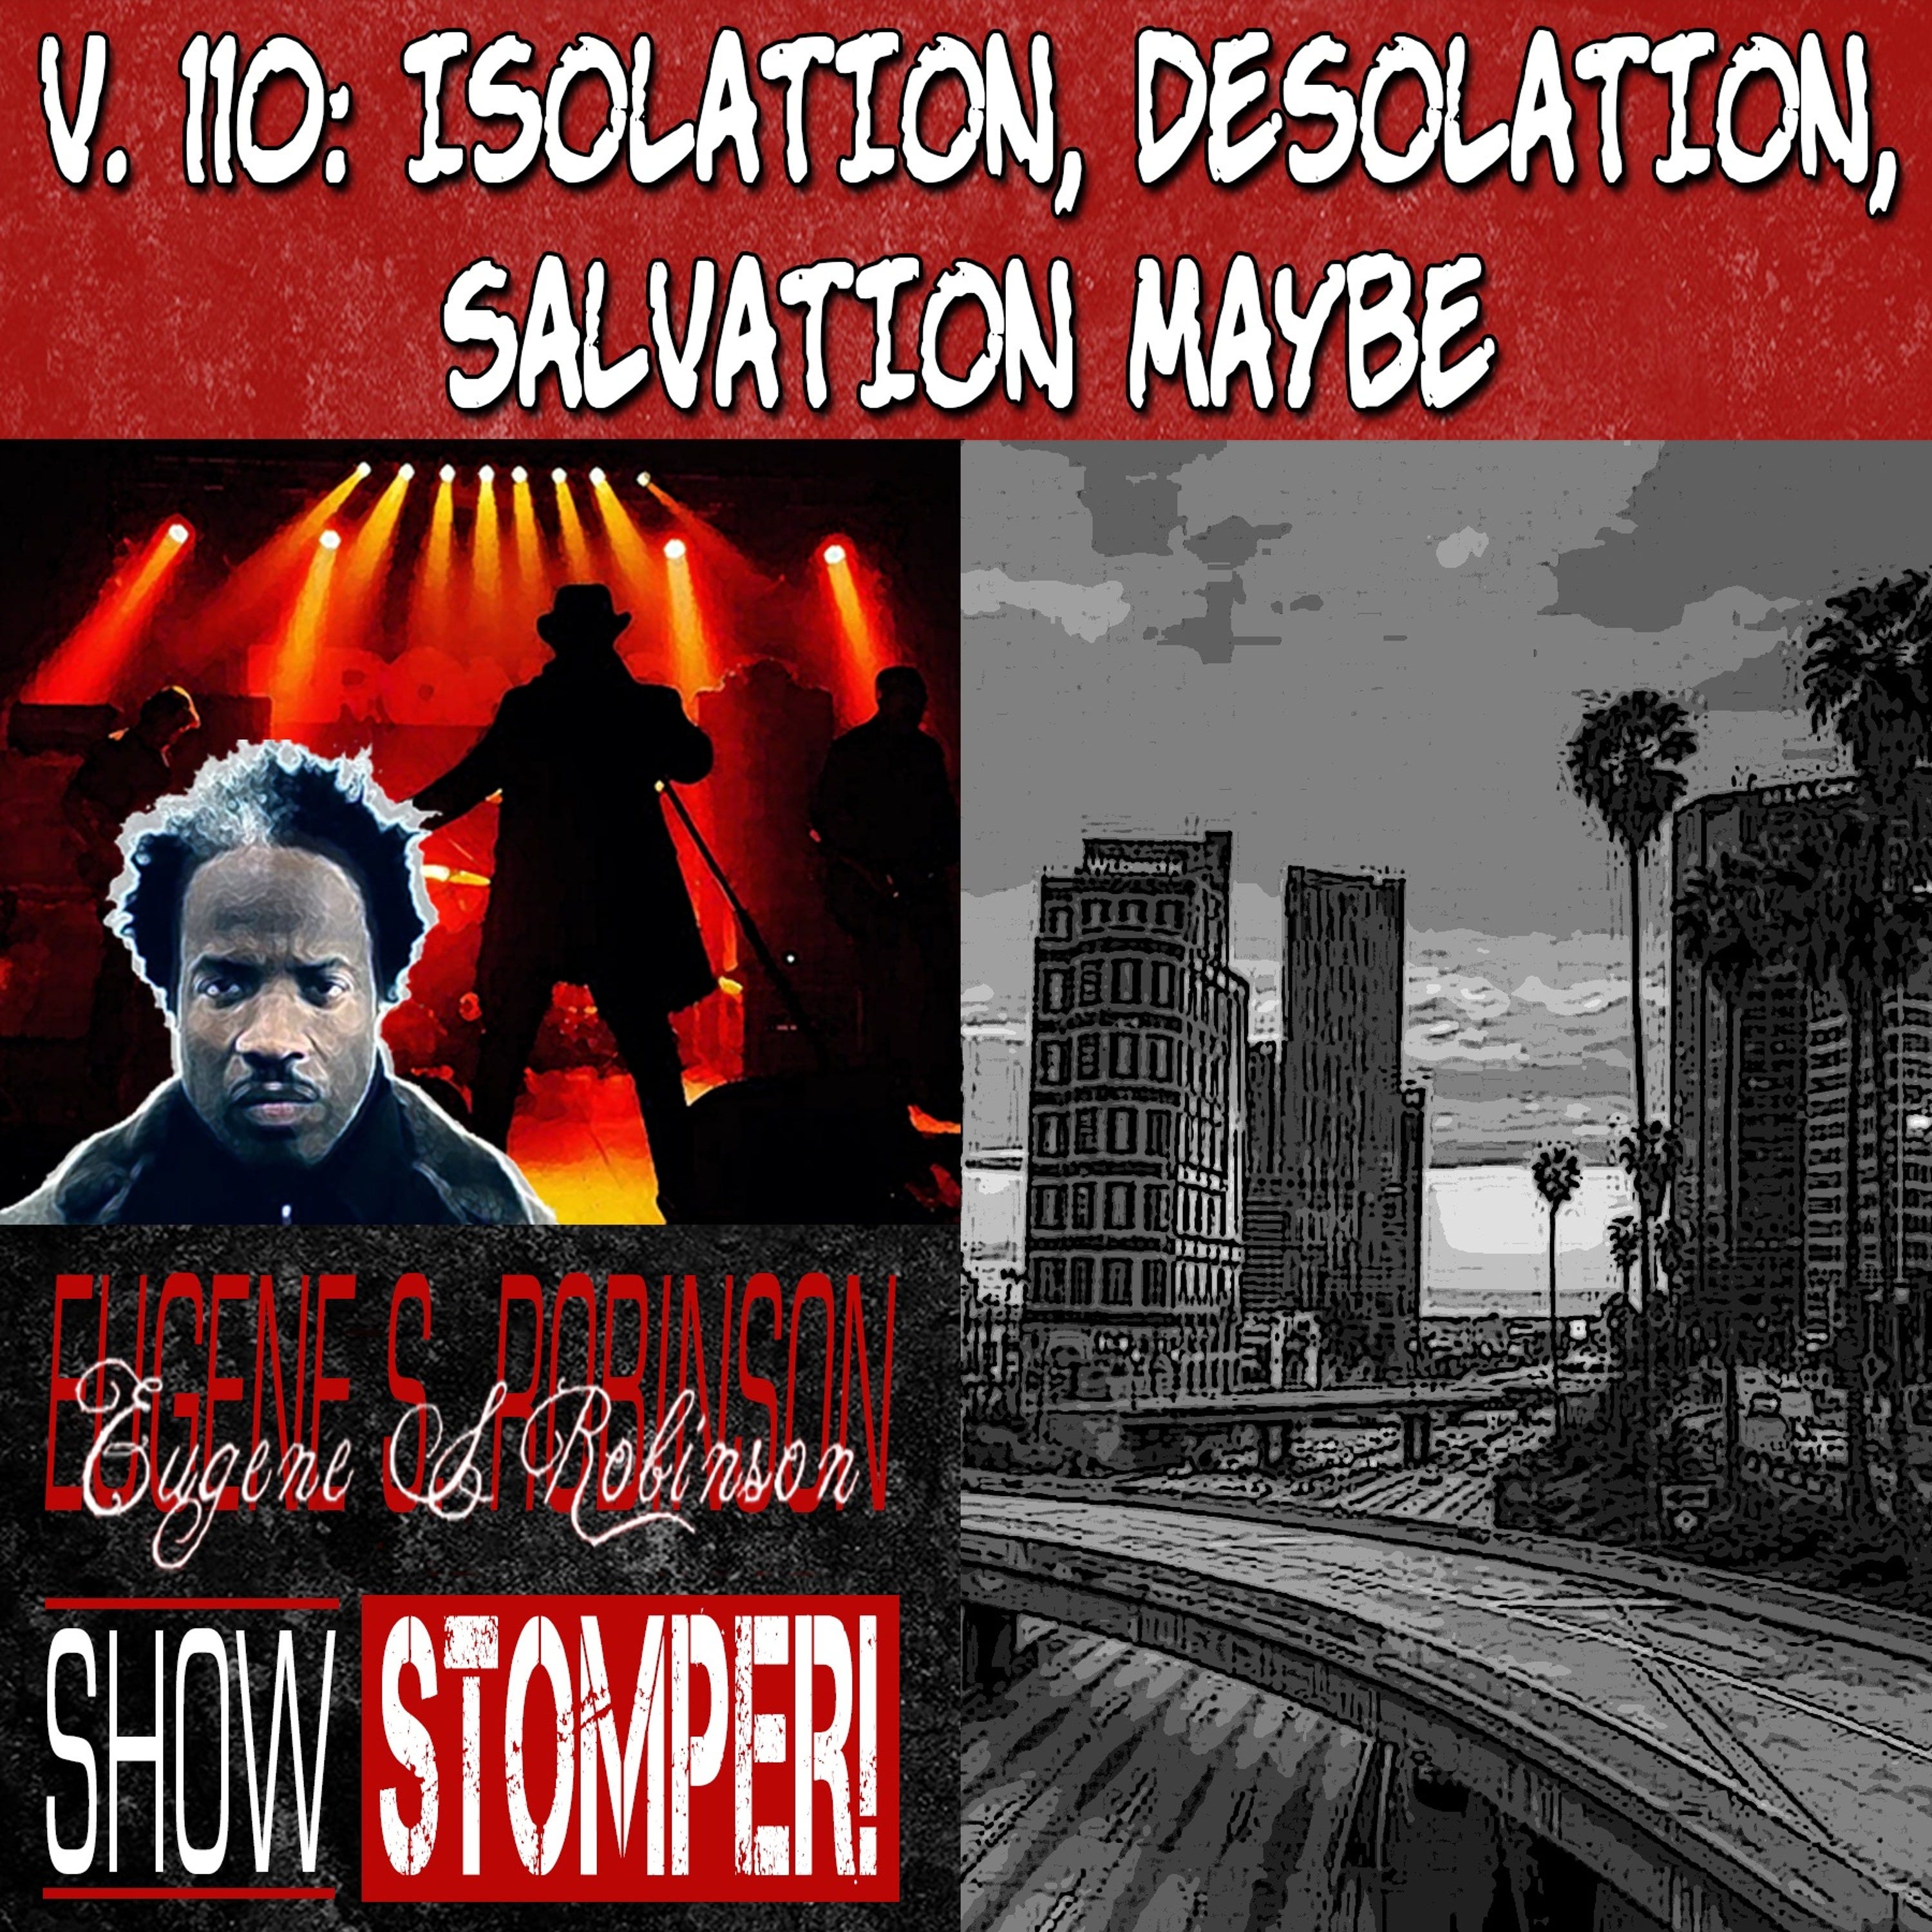 V.110 Isolation, Desolation, Salvation Maybe On The Eugene S. Robinson Show Stomper!